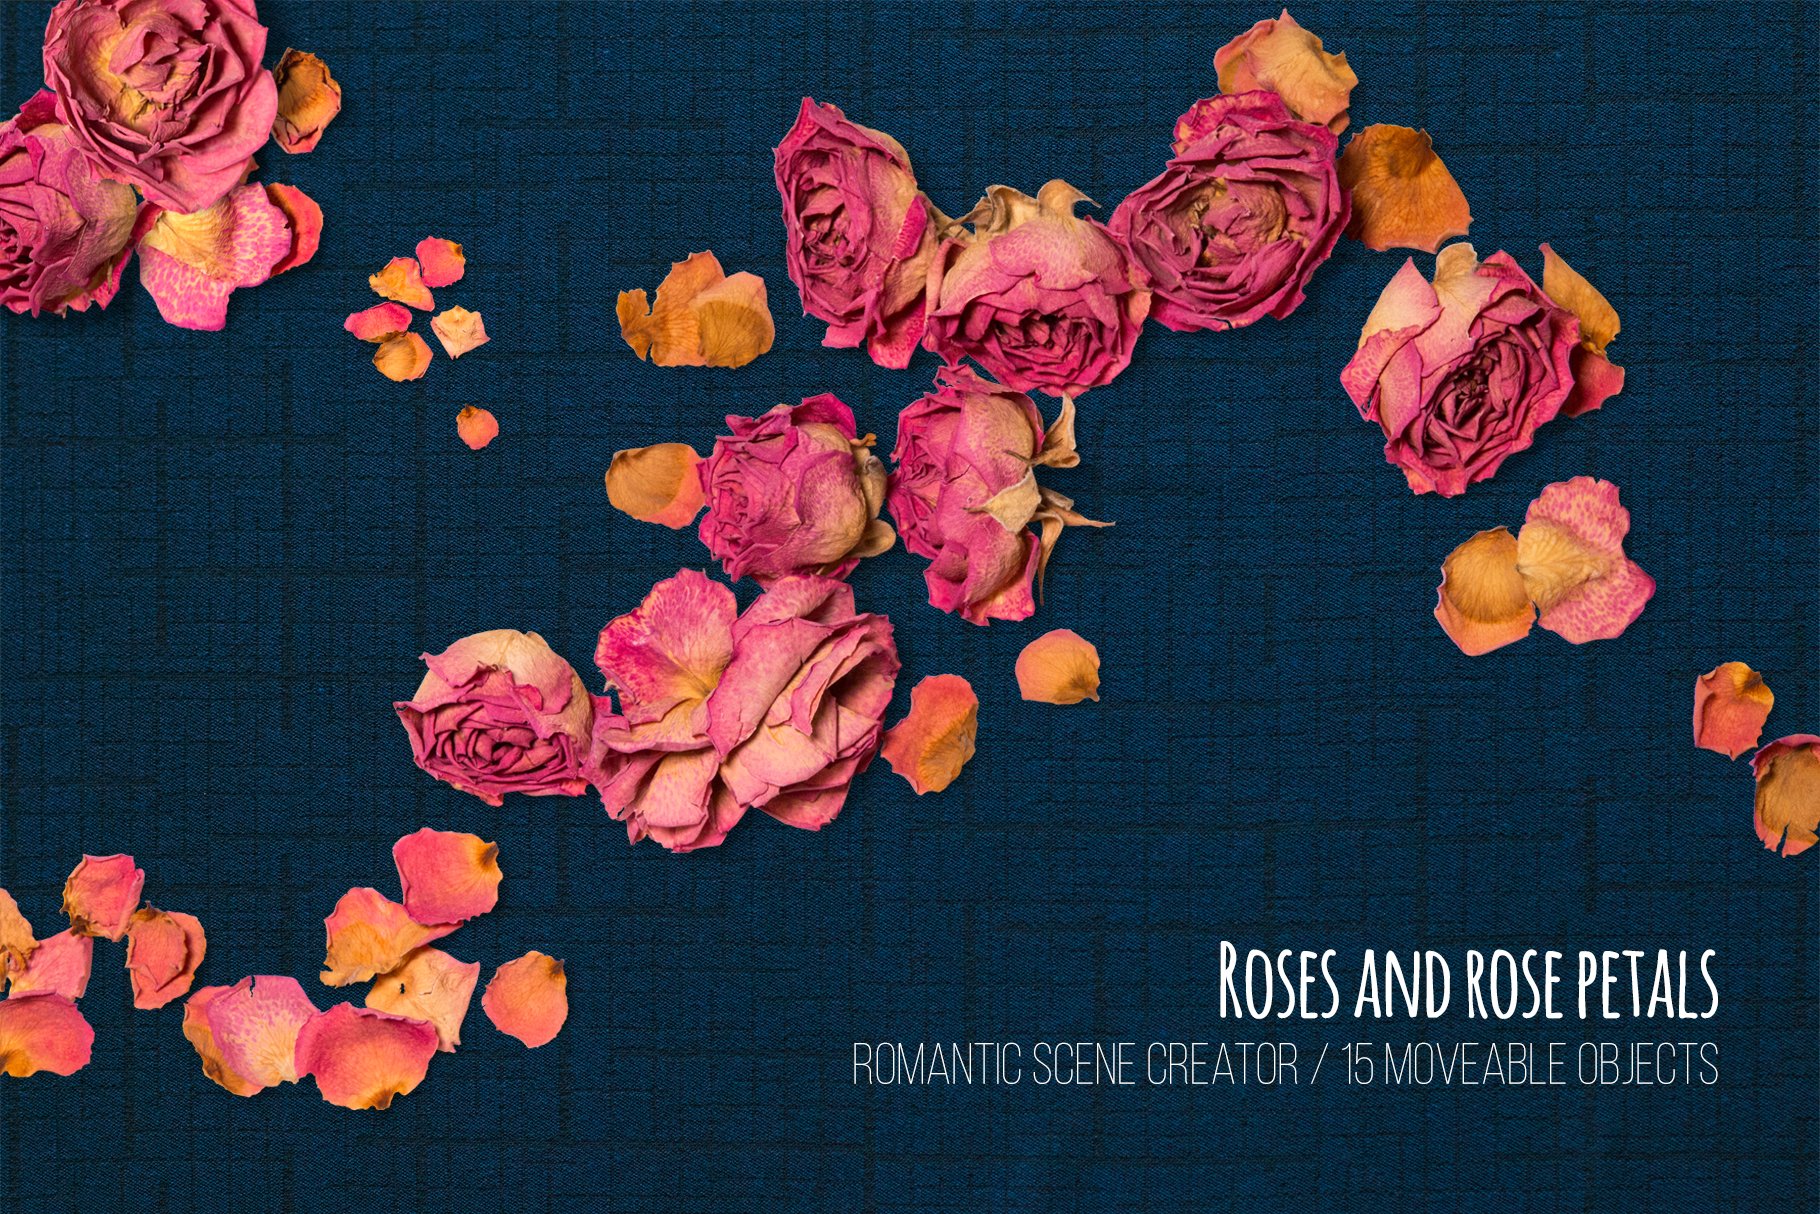 Romantic Scene Creator (top view) cover image.